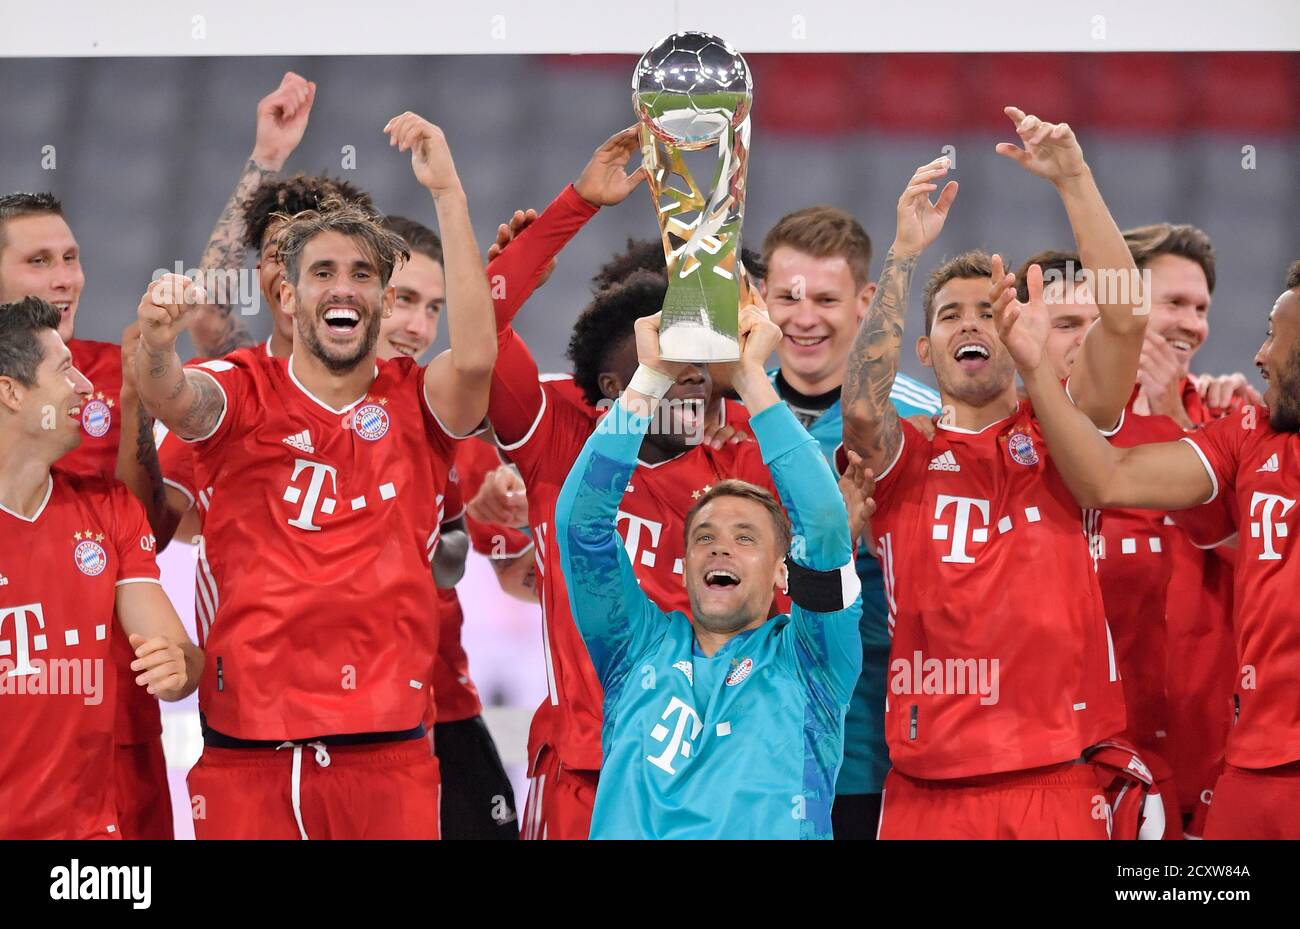 Allianz Arena Munich Germany 30.09.20, Football: German SUPERCUP FINALE  2020/2021, FC Bayern Muenchen (FCB, red) vs Borussia Dortmund (BVB, yellow)  3:2 — Team Bayern Muenchen celebrates the win of the German Supercup